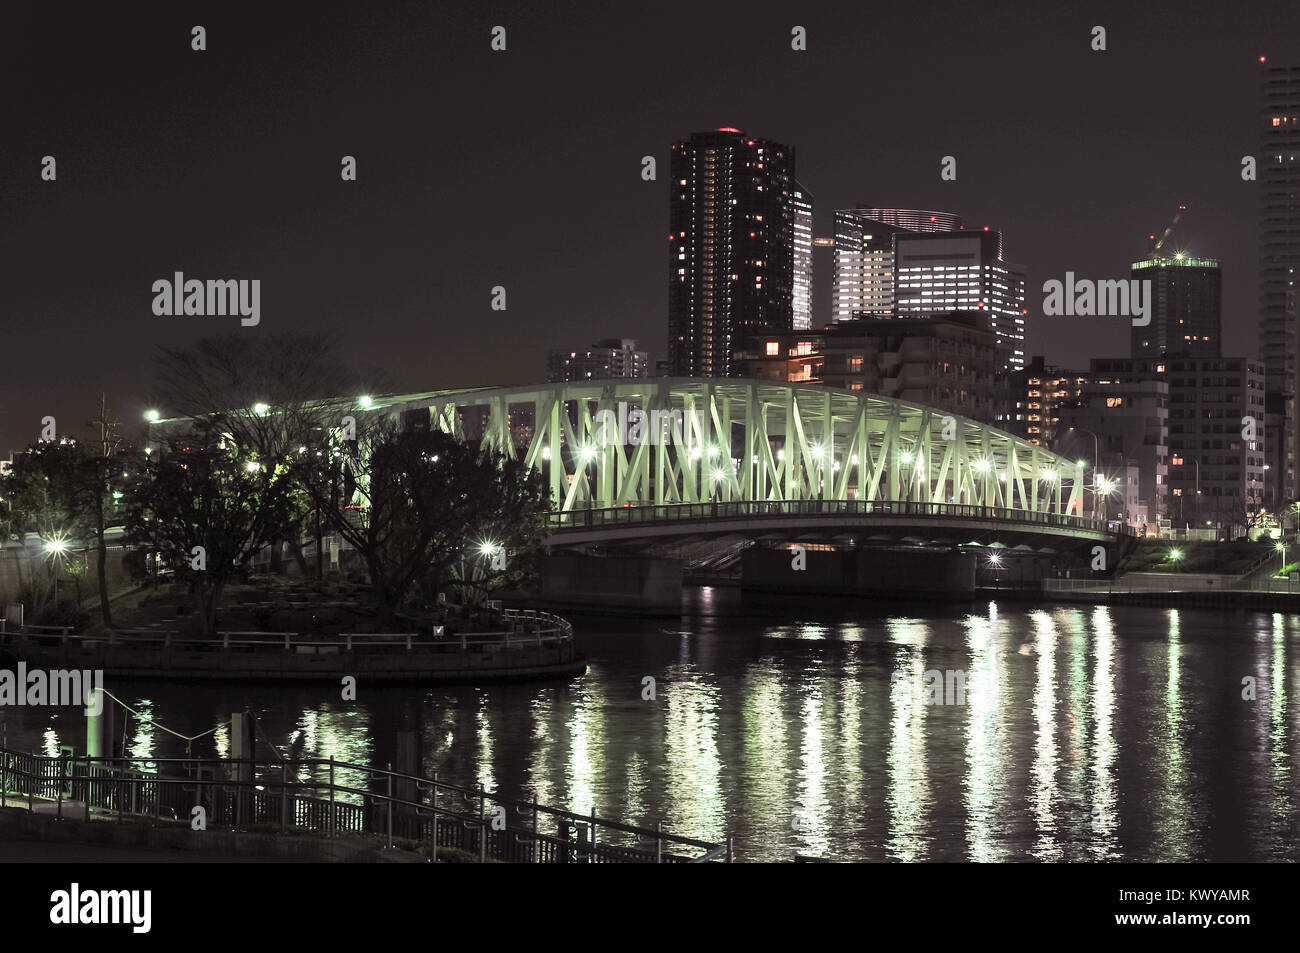 Eitai-bashi Bridge near the Monzen-nakacho area crossing the Sumida River in Tokyo, Japan at night. Stock Photo